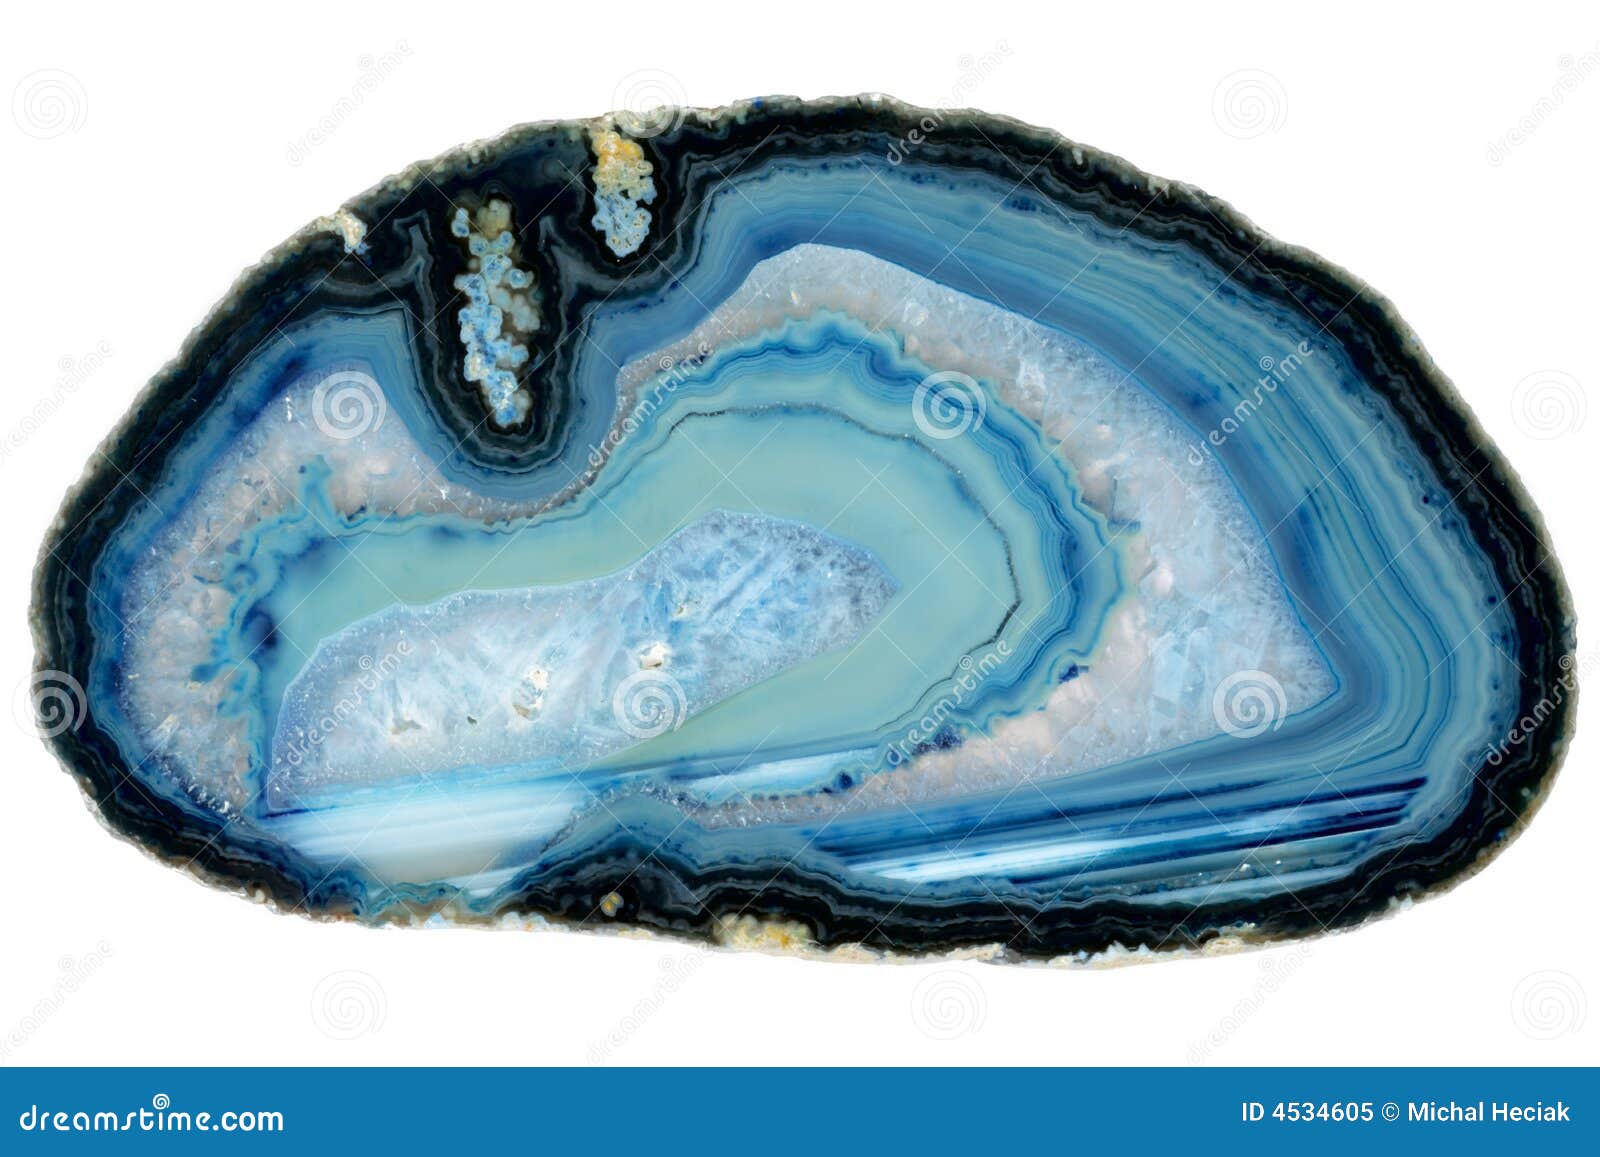 blue agate crystal stone